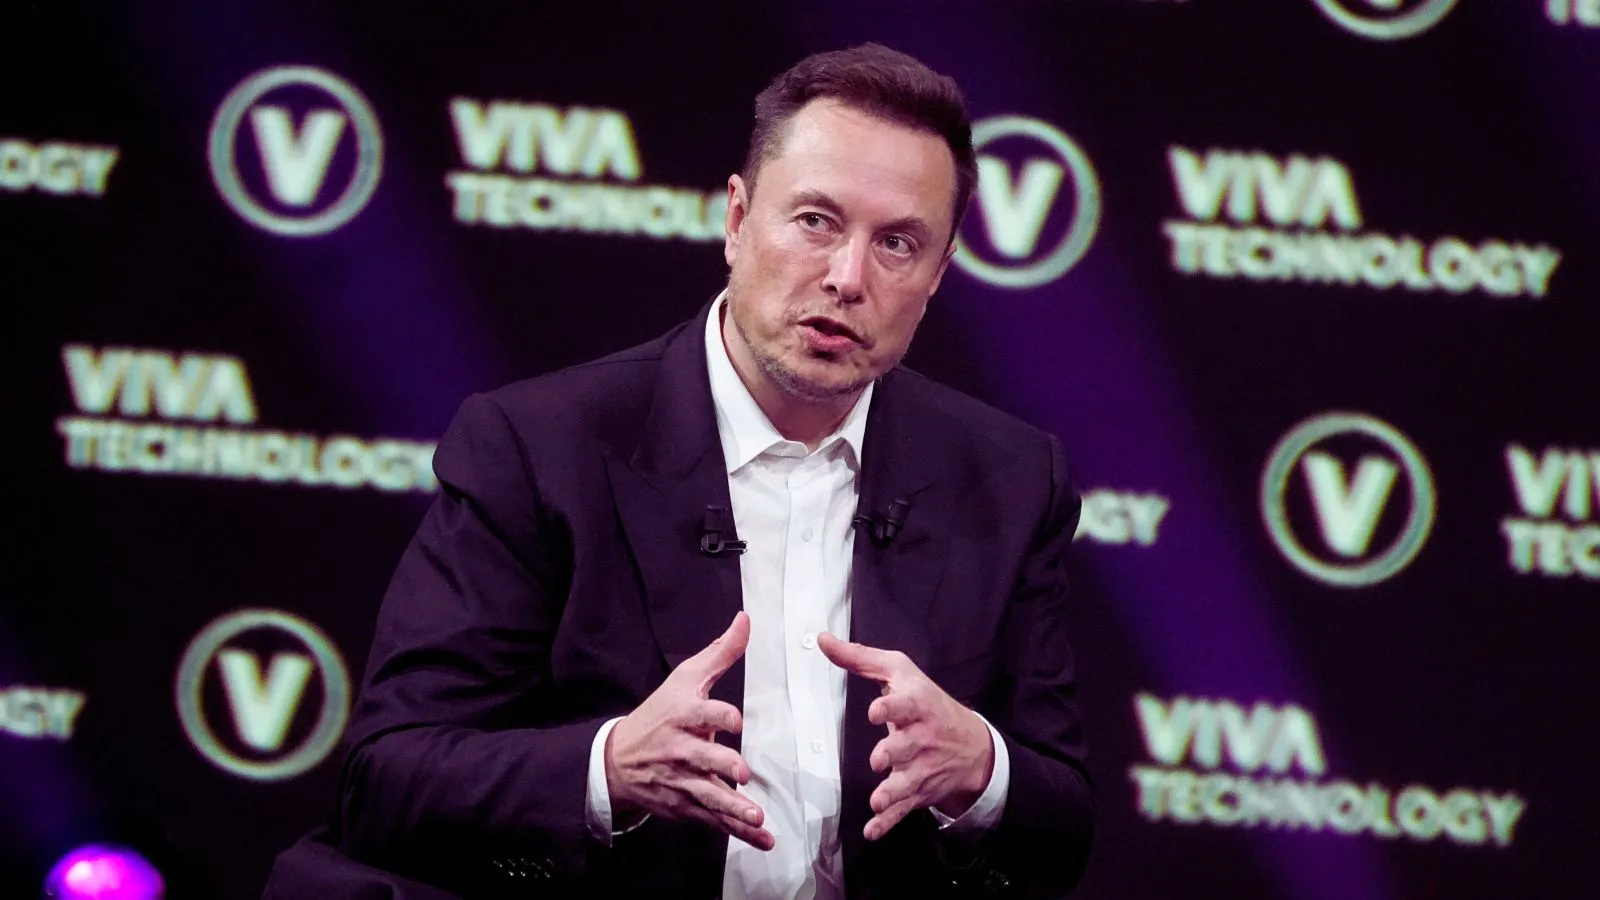 Elon Musk challenges regulator's order, citing concerns about jurisdiction (Credits: AP Photo)